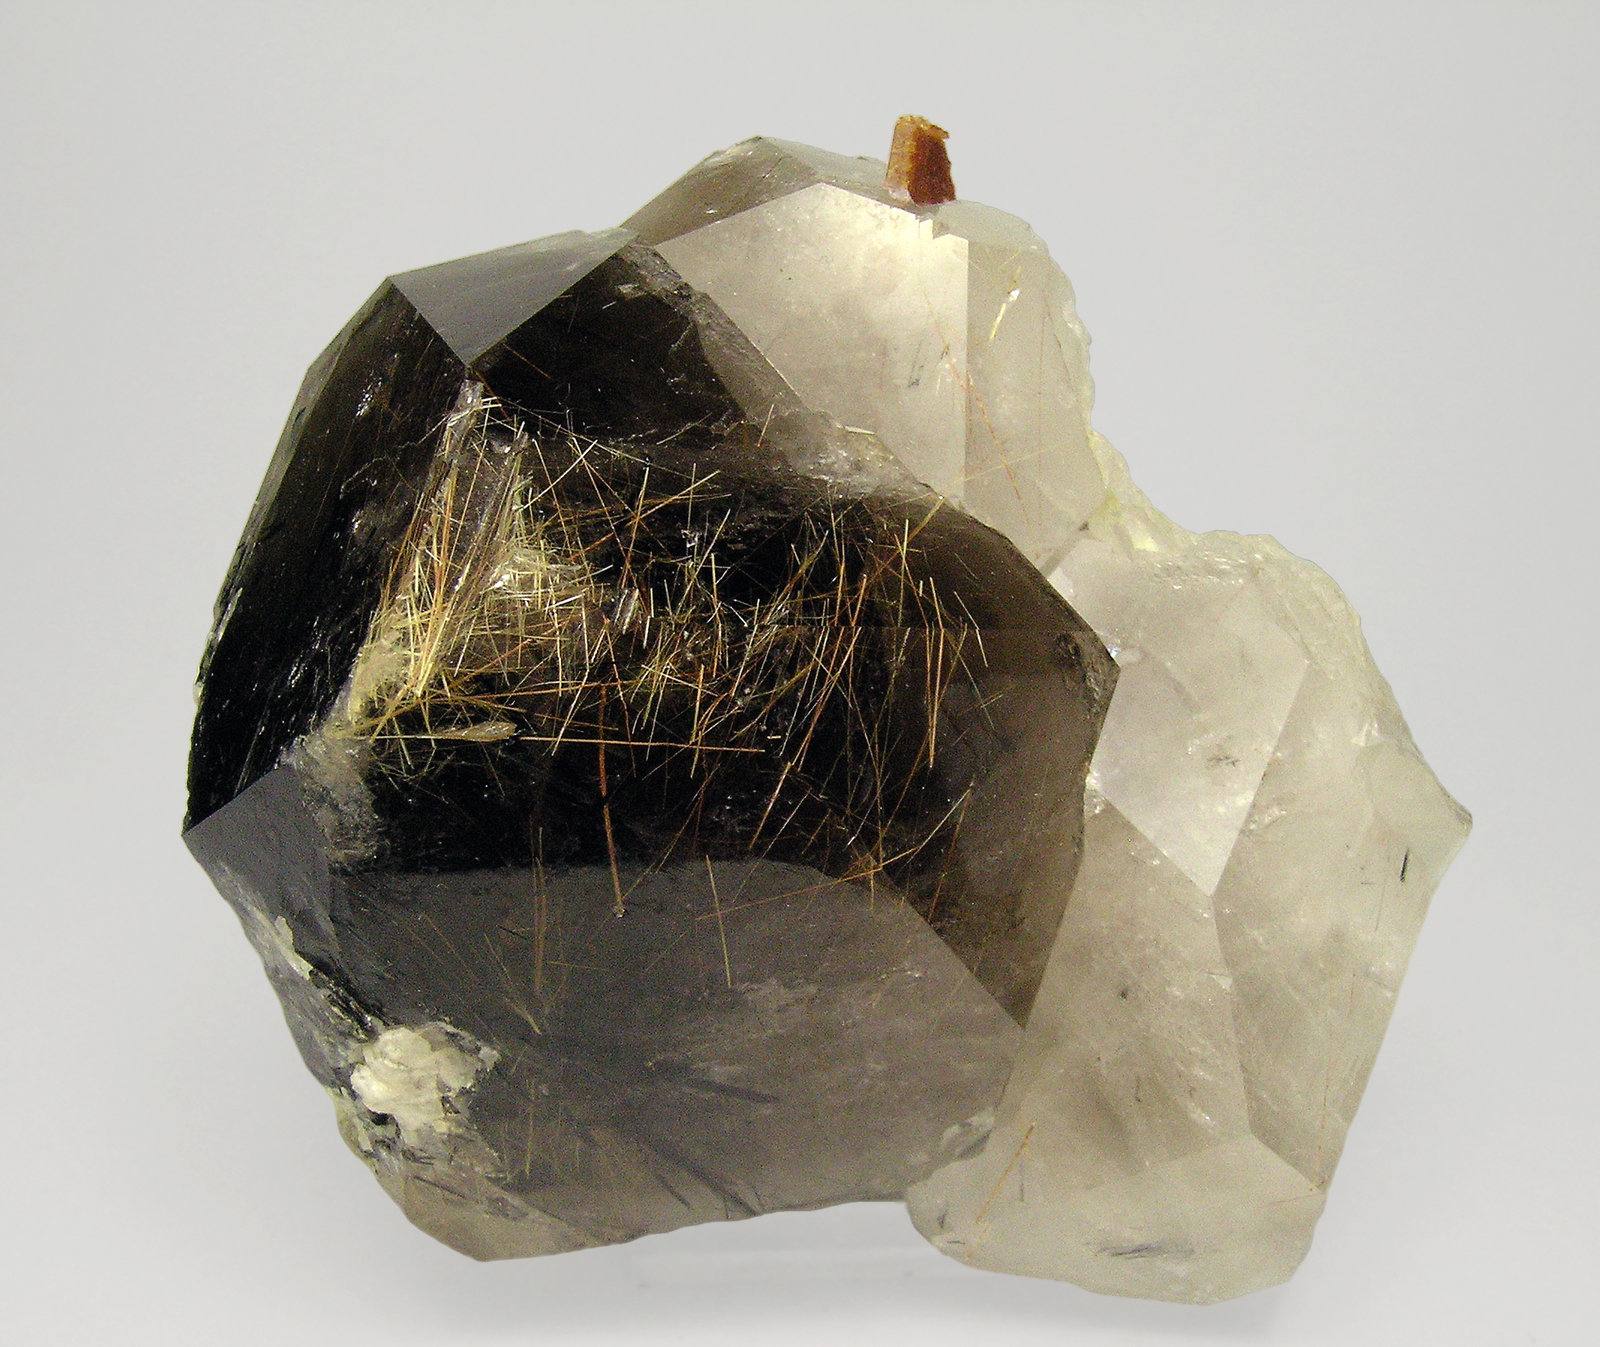 specimens/s_imagesQ7/Smoky_quartz-TN54Q7f.jpg